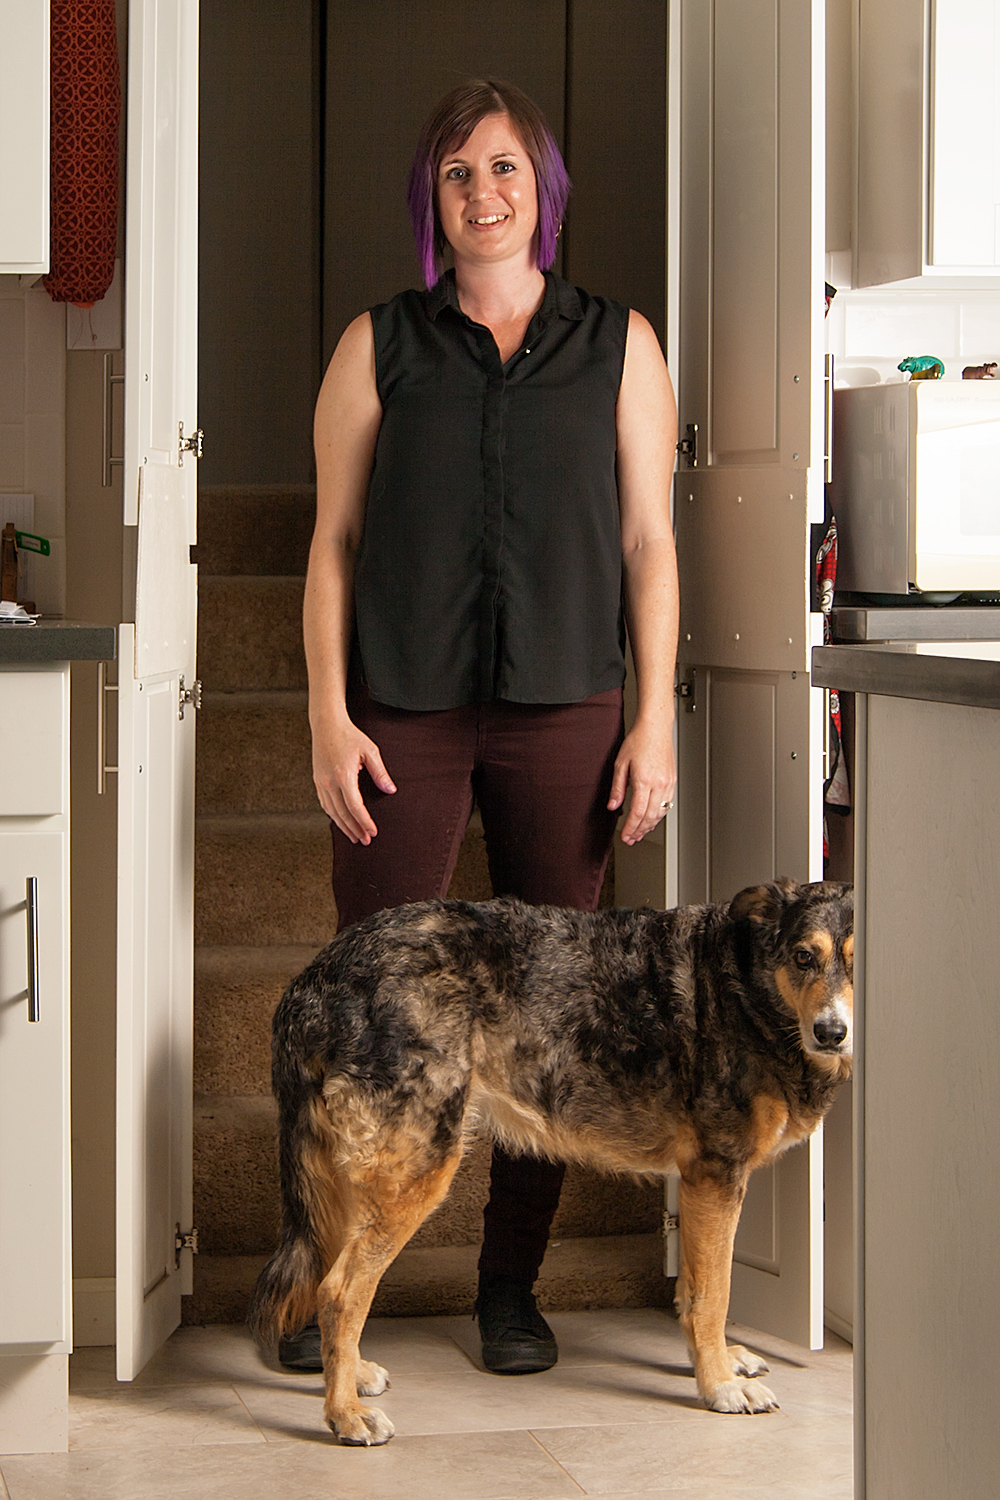 Jamie Louise Molaro standing with Phoebe the dog.